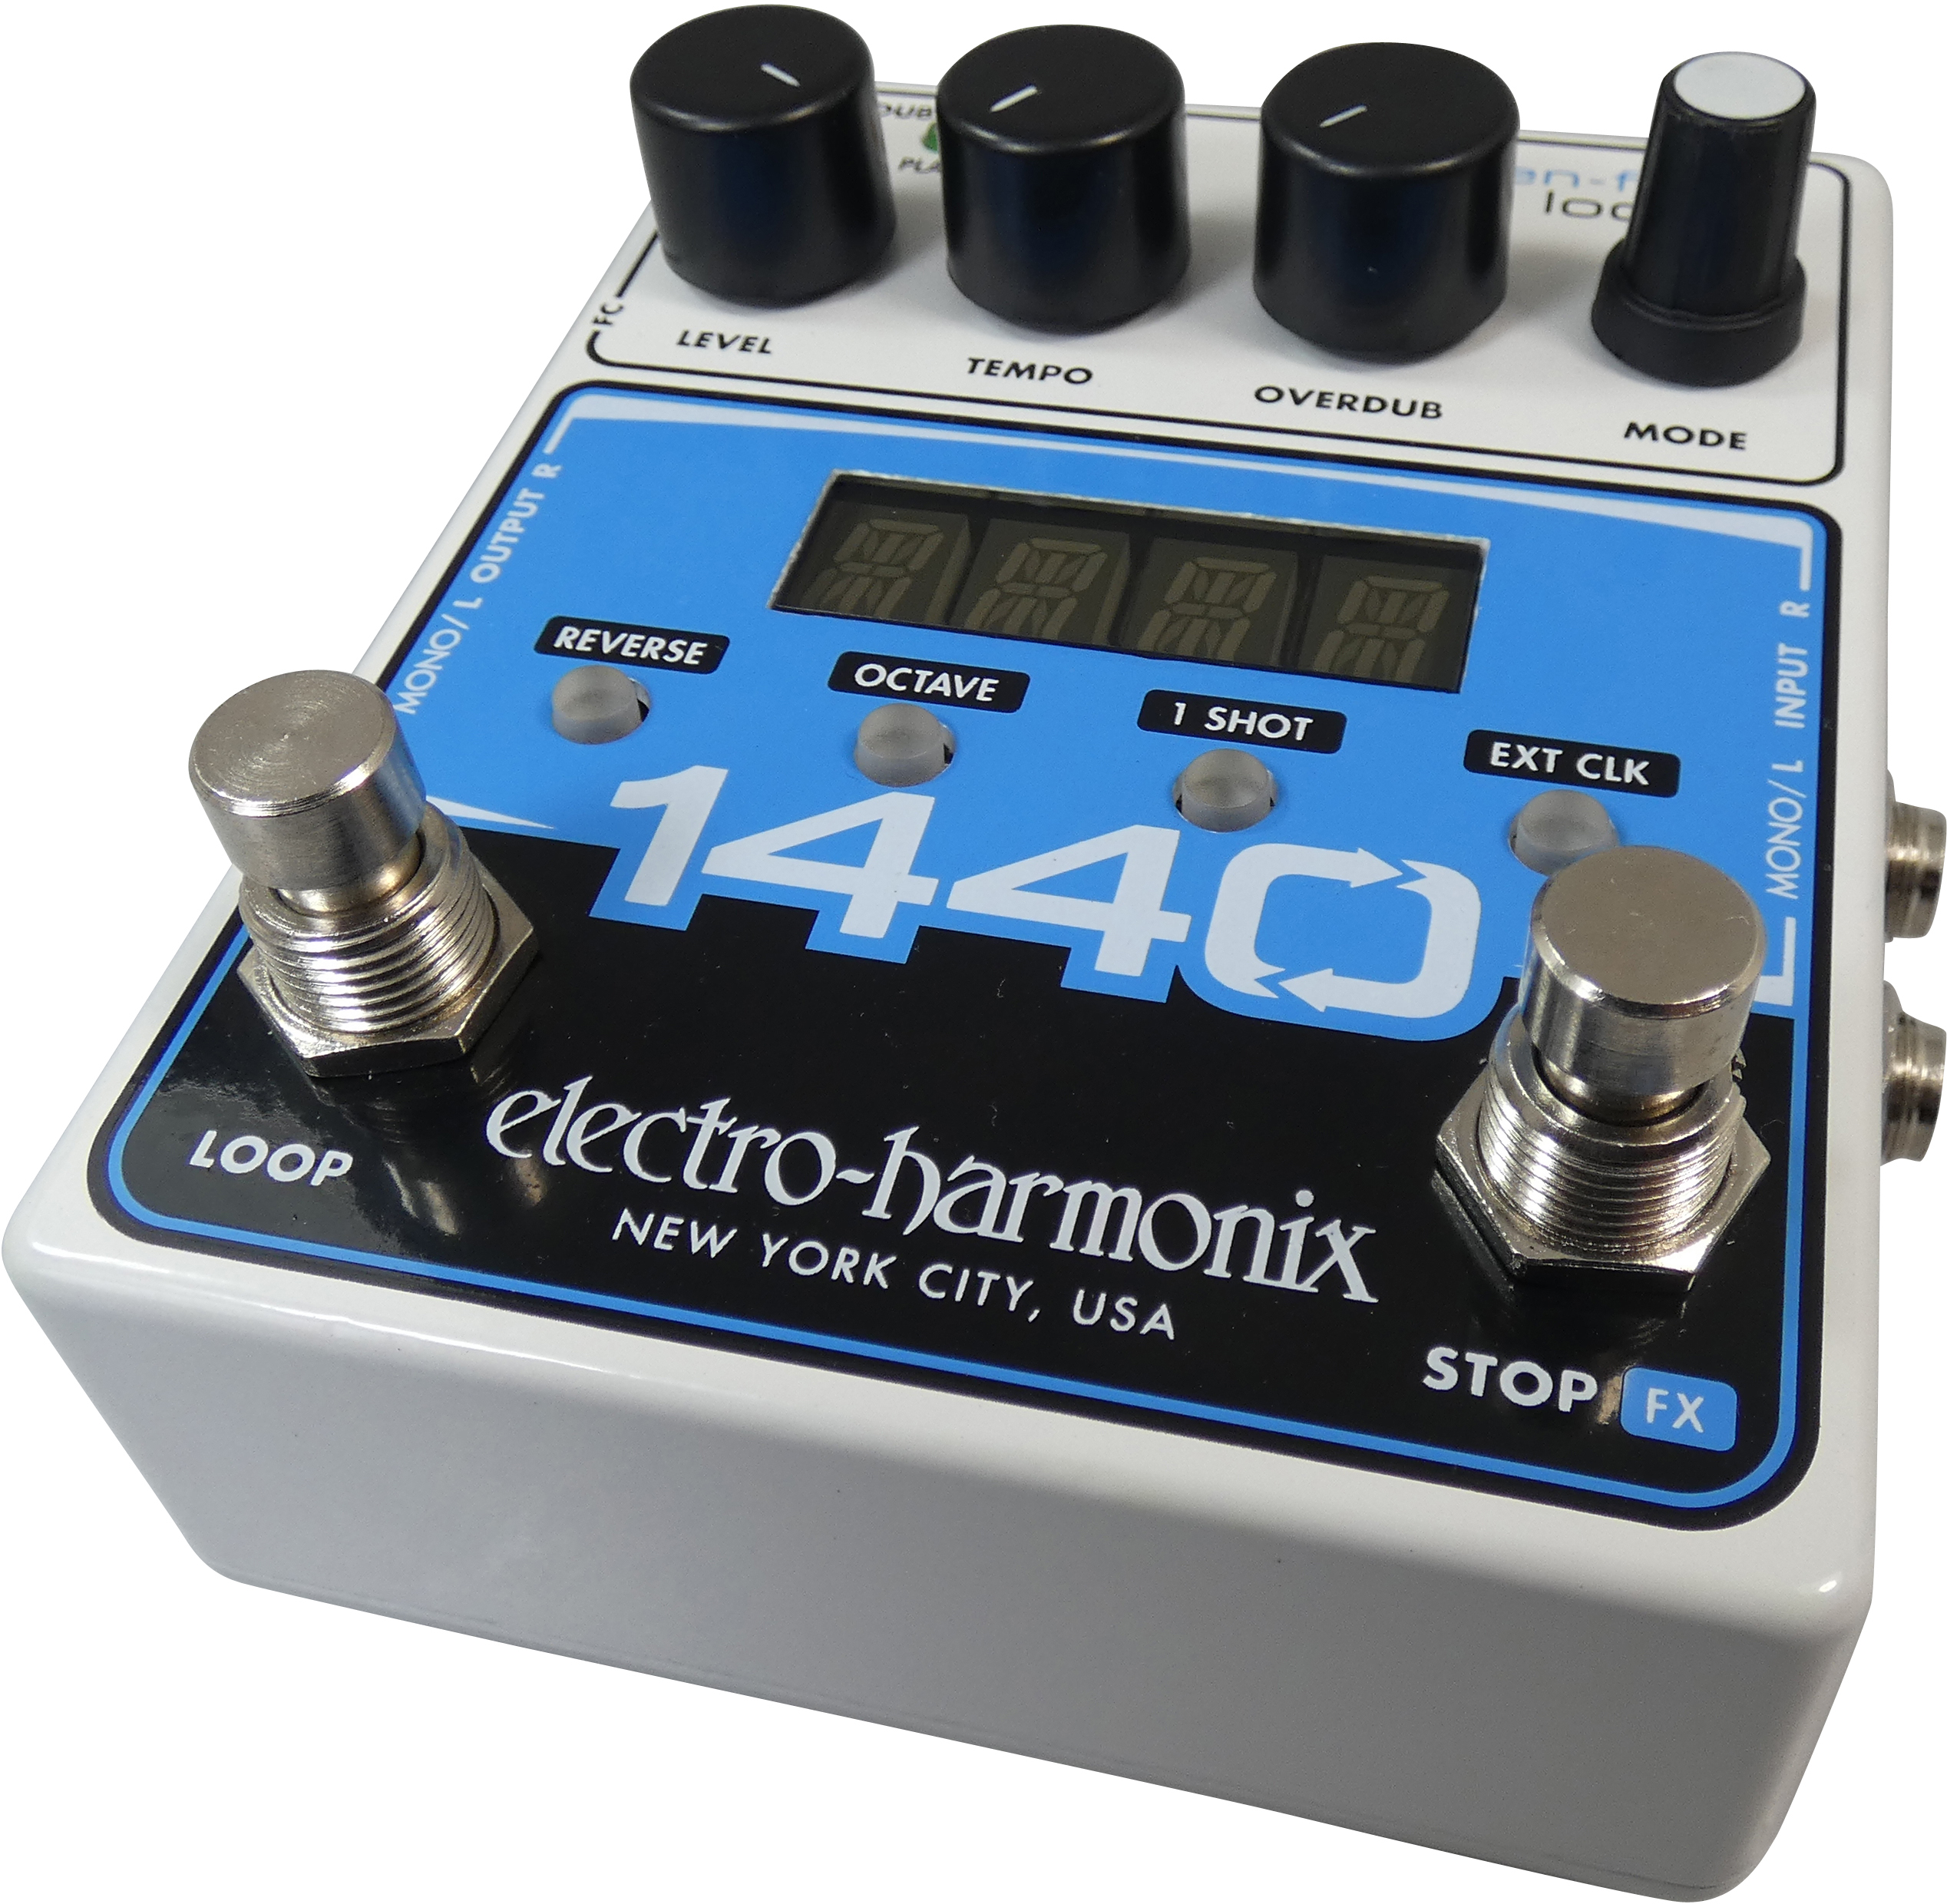 EHX Electro Harmonix 1440 Stereo Looper Guitar Effects Pedal